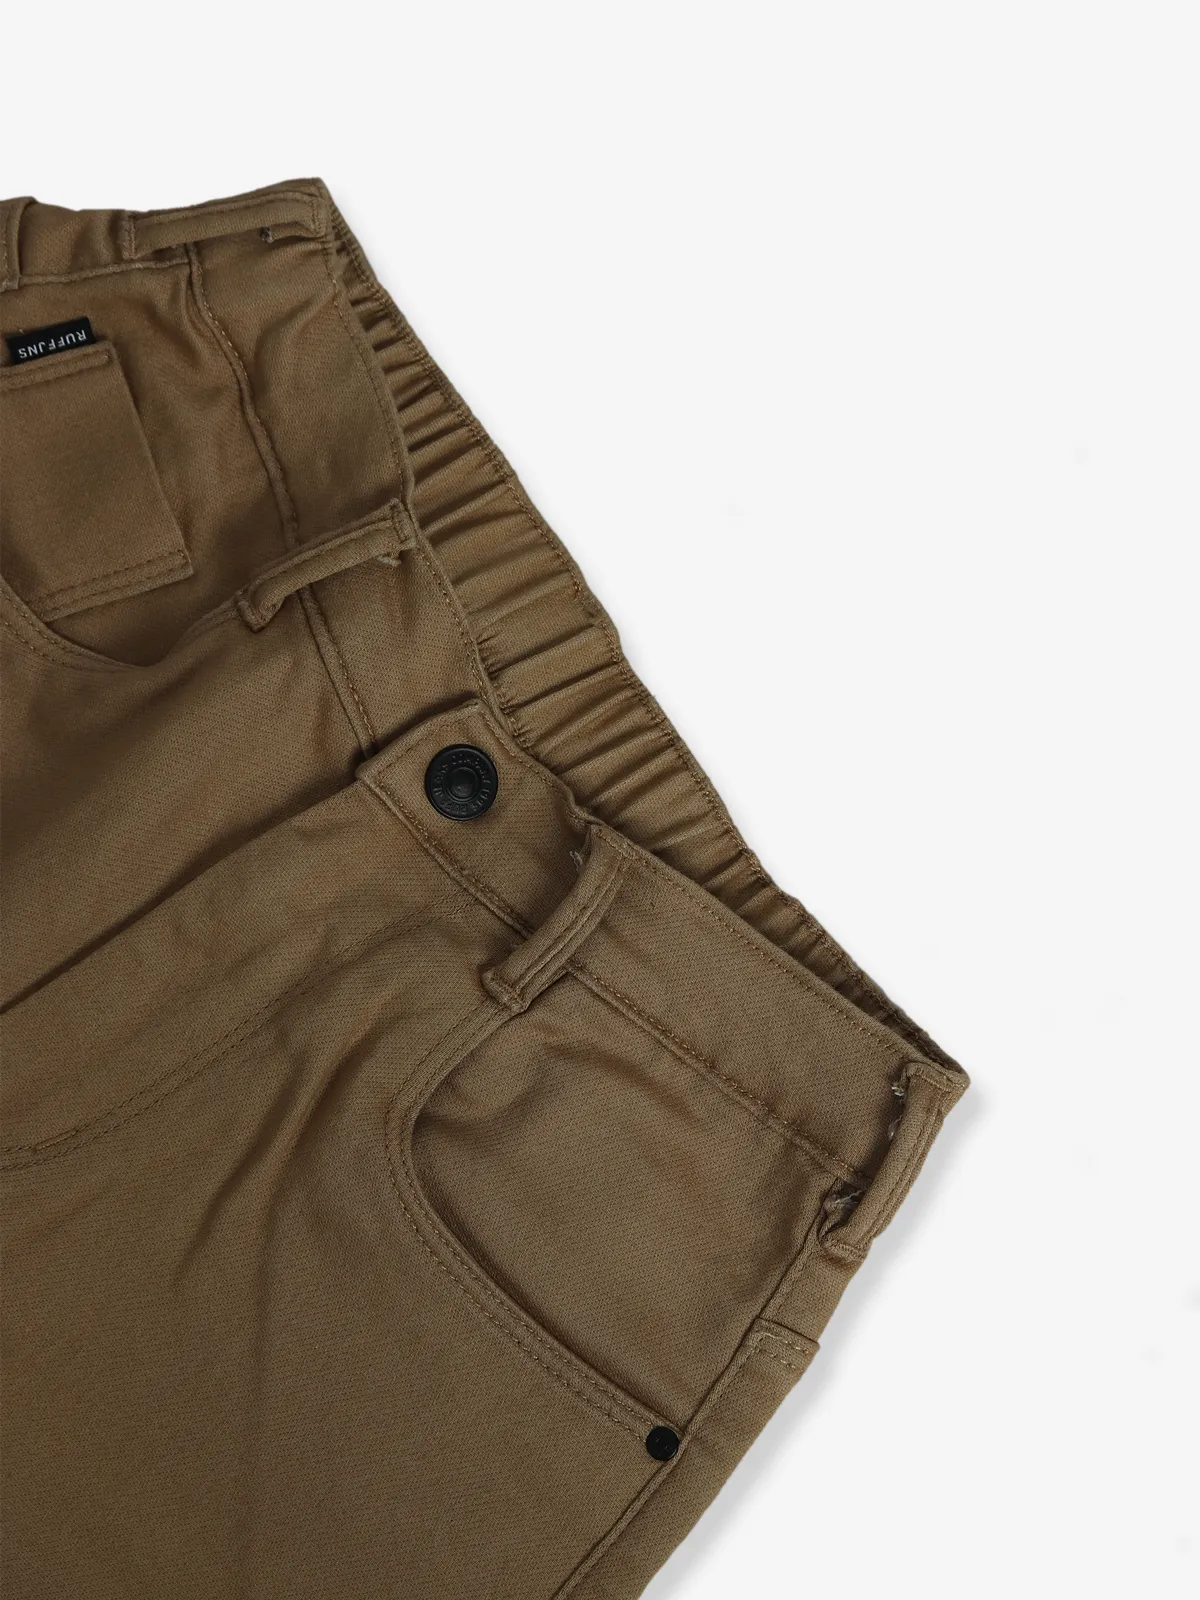 Ruff khaki solid shorts